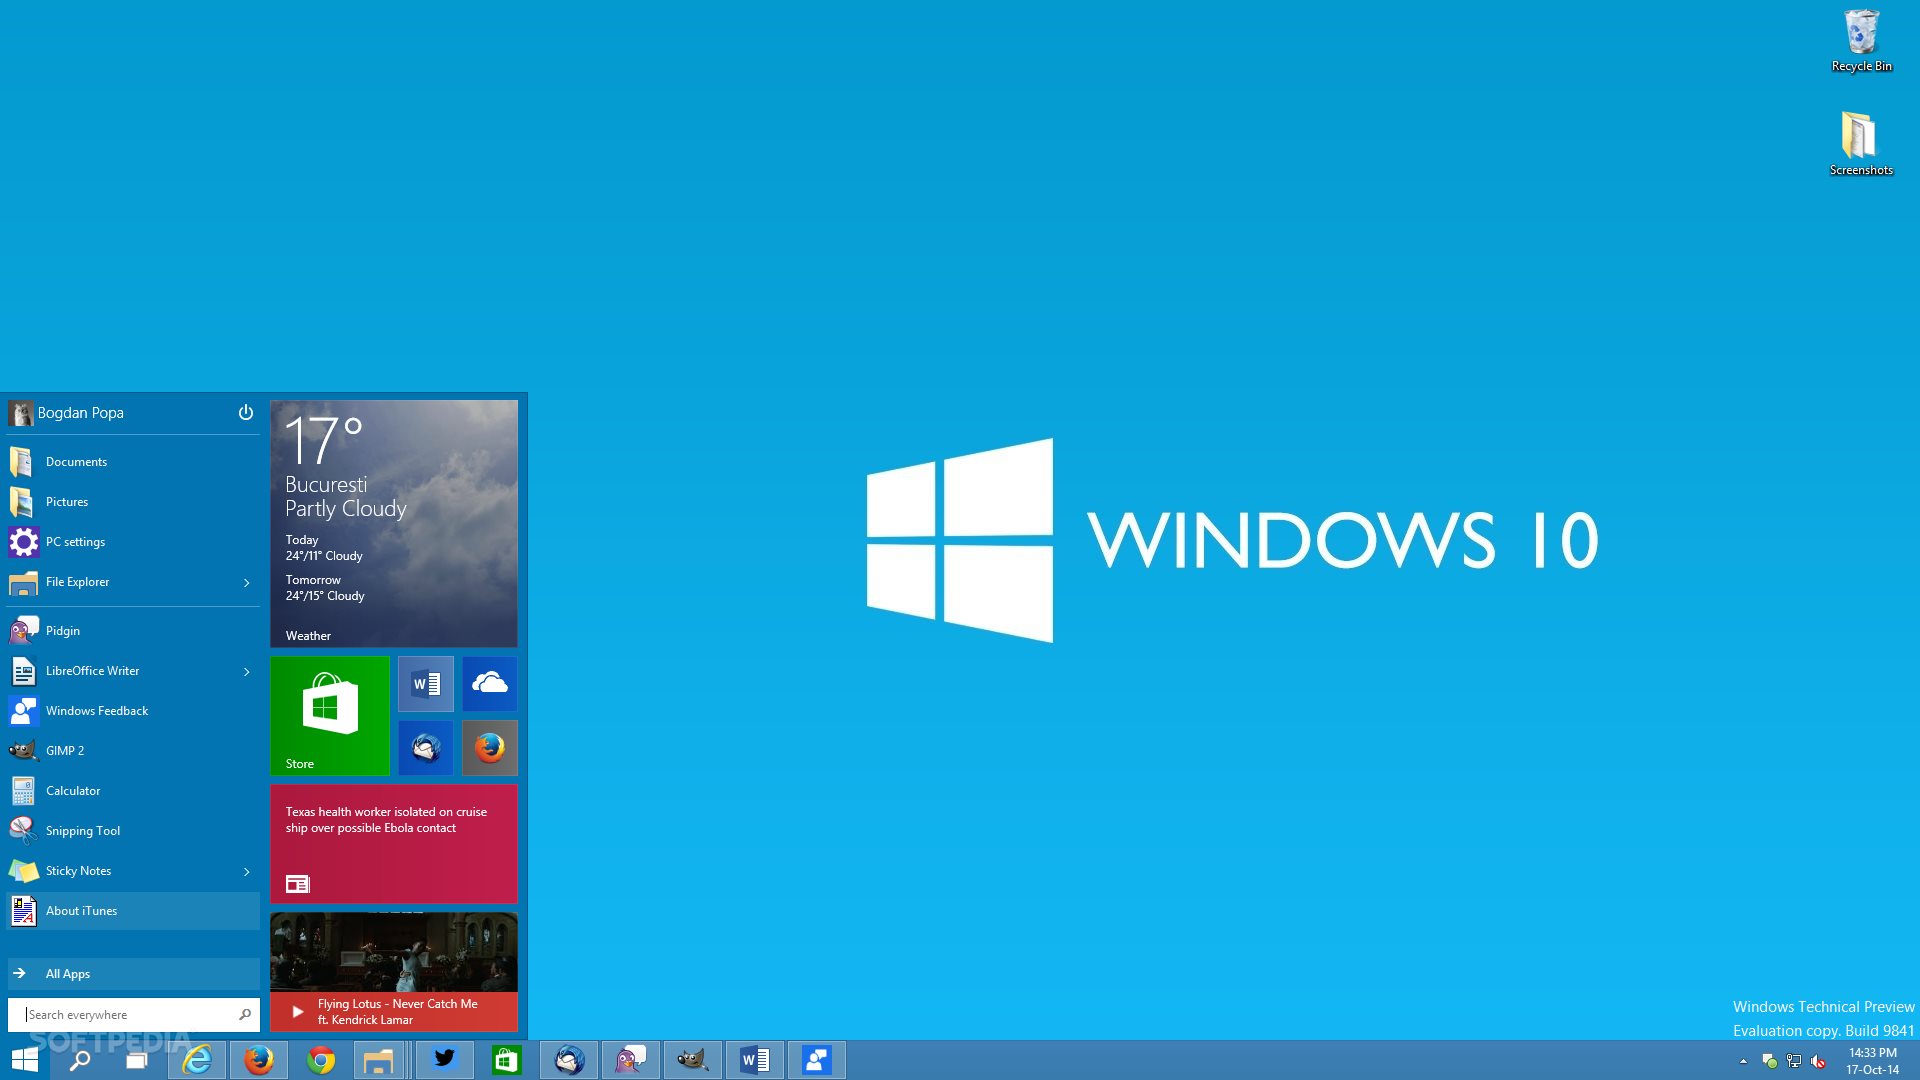 Windows 10 Preview 10 Usability Screenshots win10themesnet 1920x1080